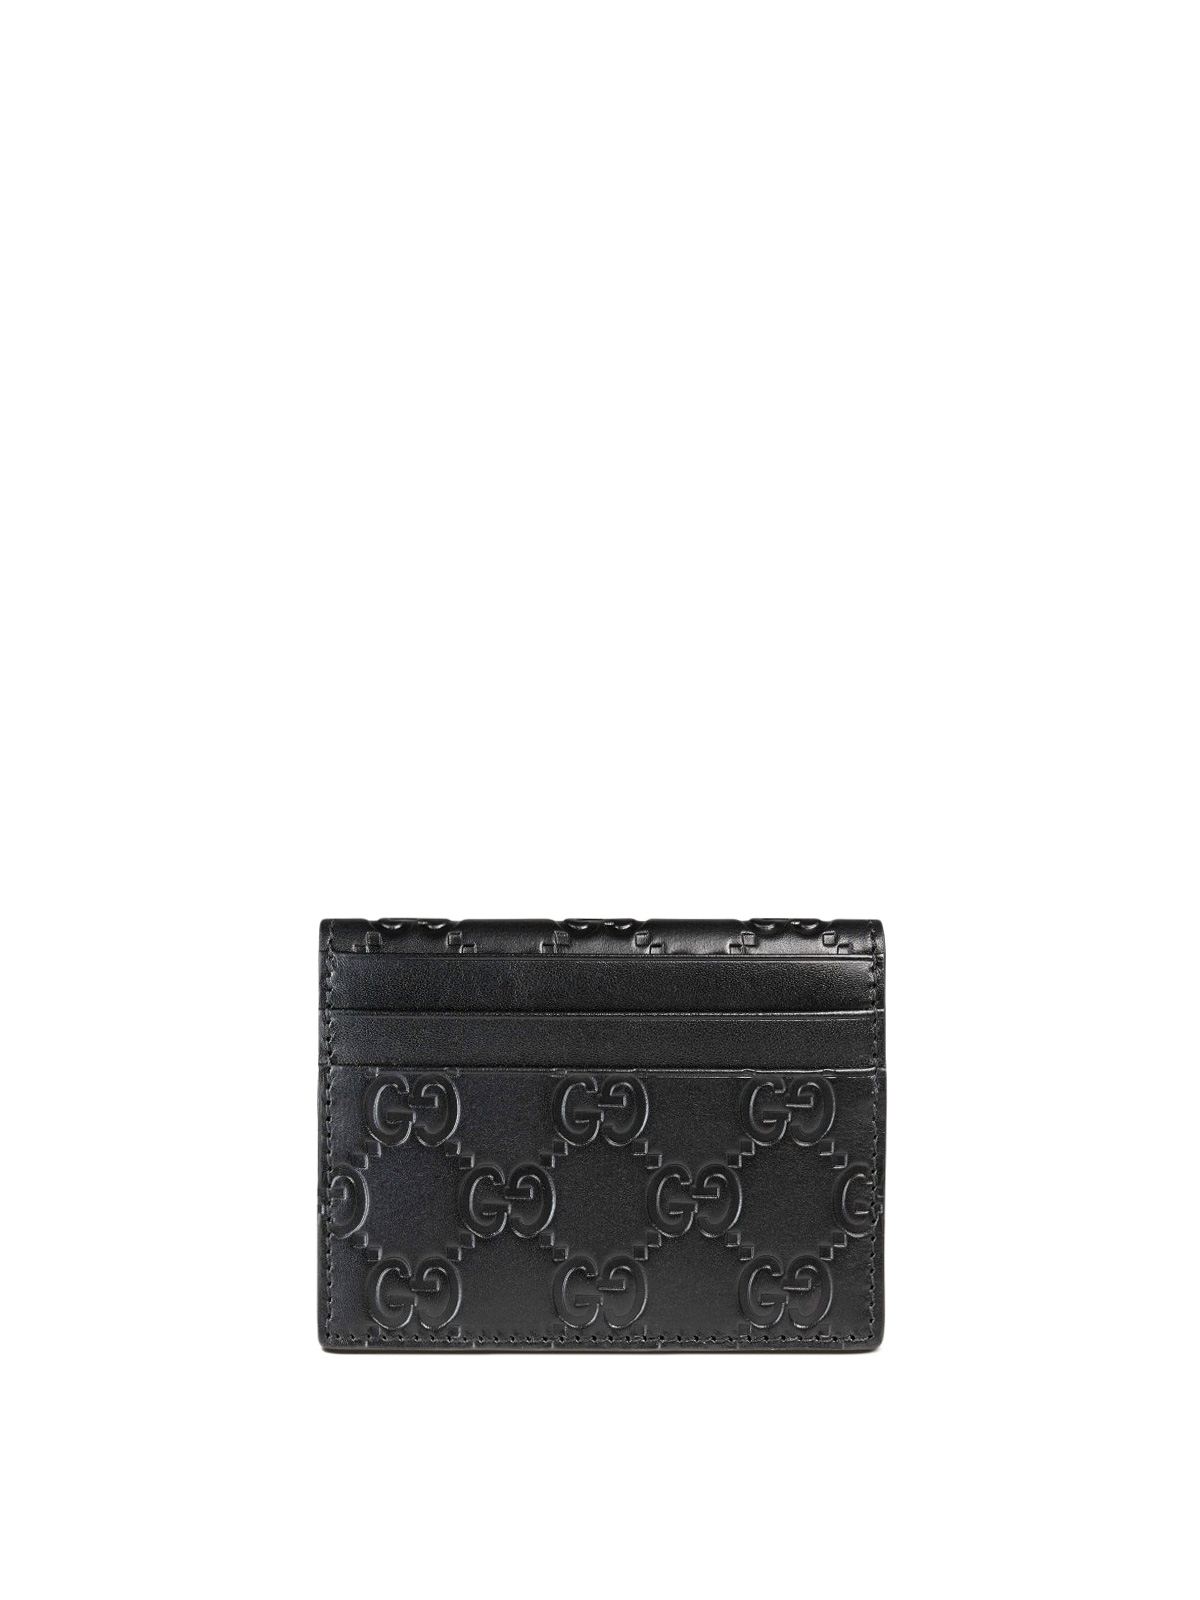 gucci signature leather card case